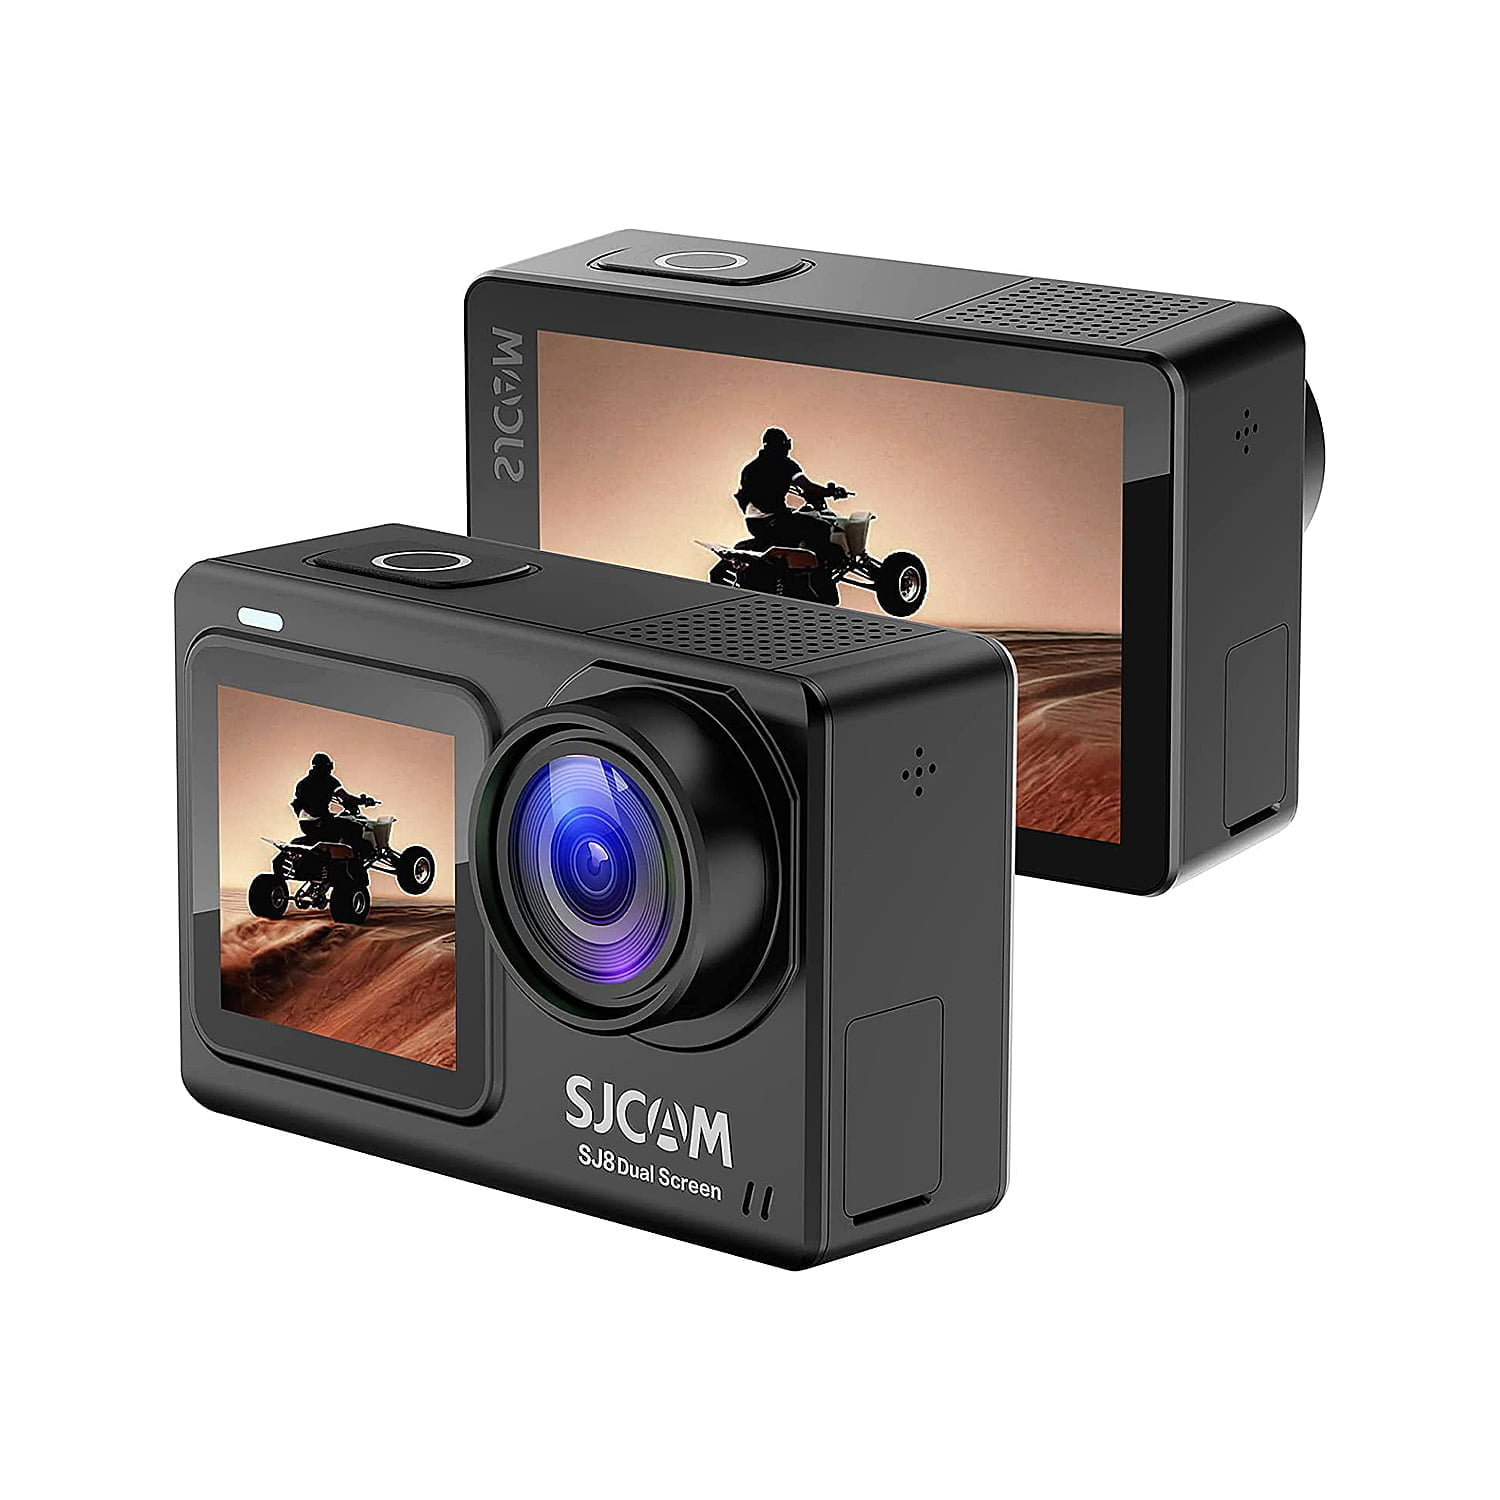 SJCAM SJ8 Dual Screen Action Camera in BD